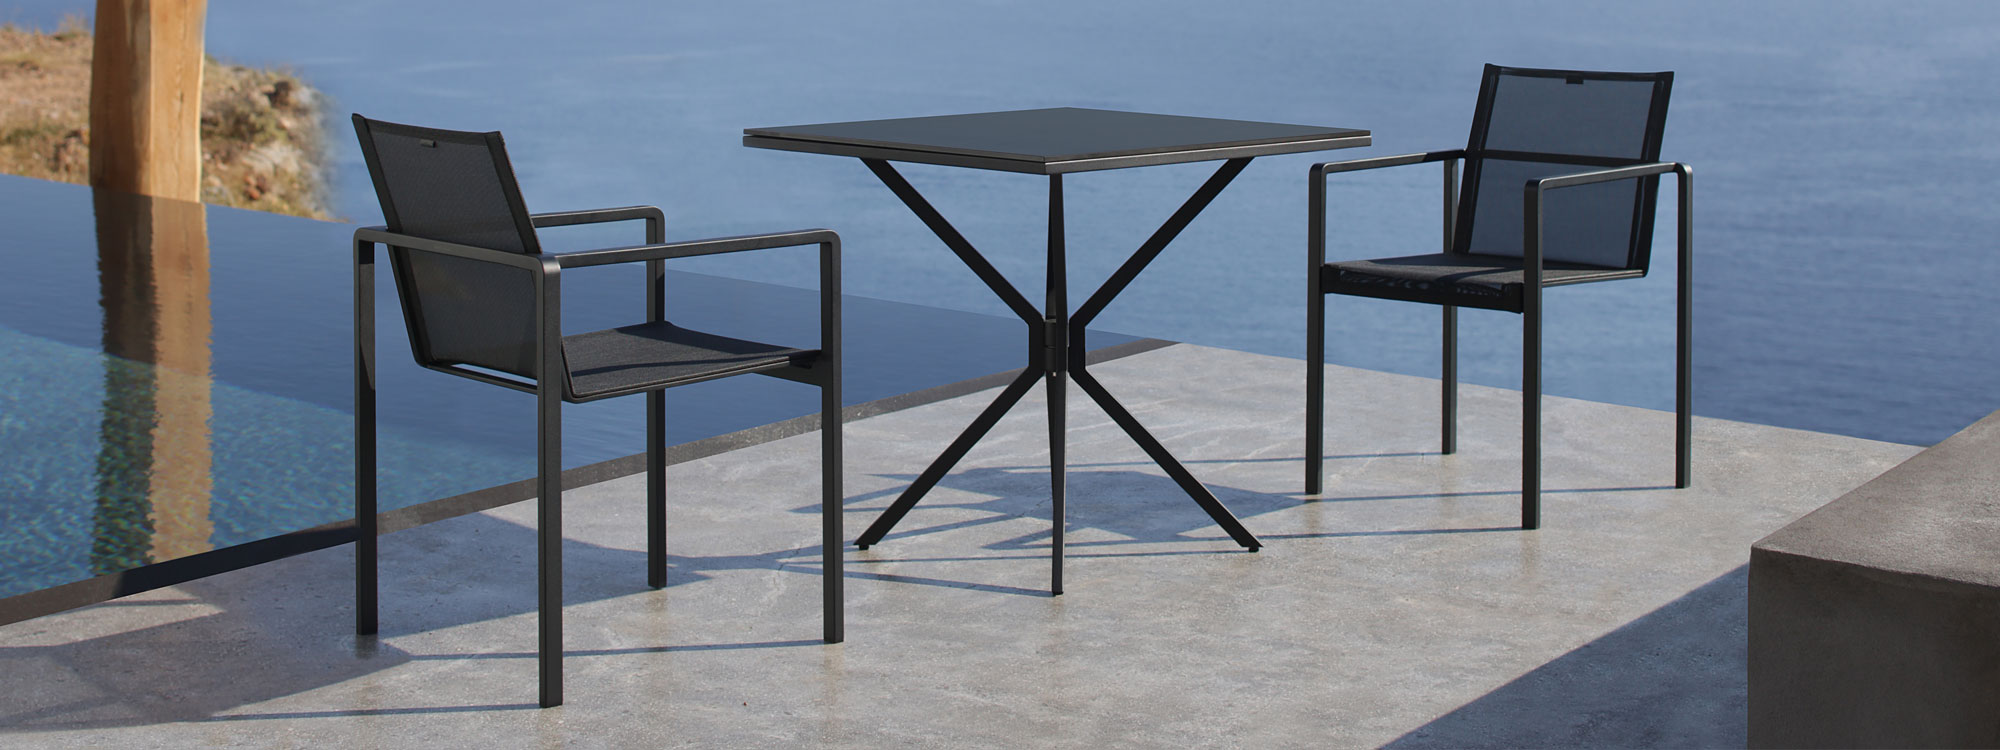 Alura chair & Traverse folding garden table is a versatile modern outdoor table in quality fold-down garden table materials by Royal Botania garden furniture